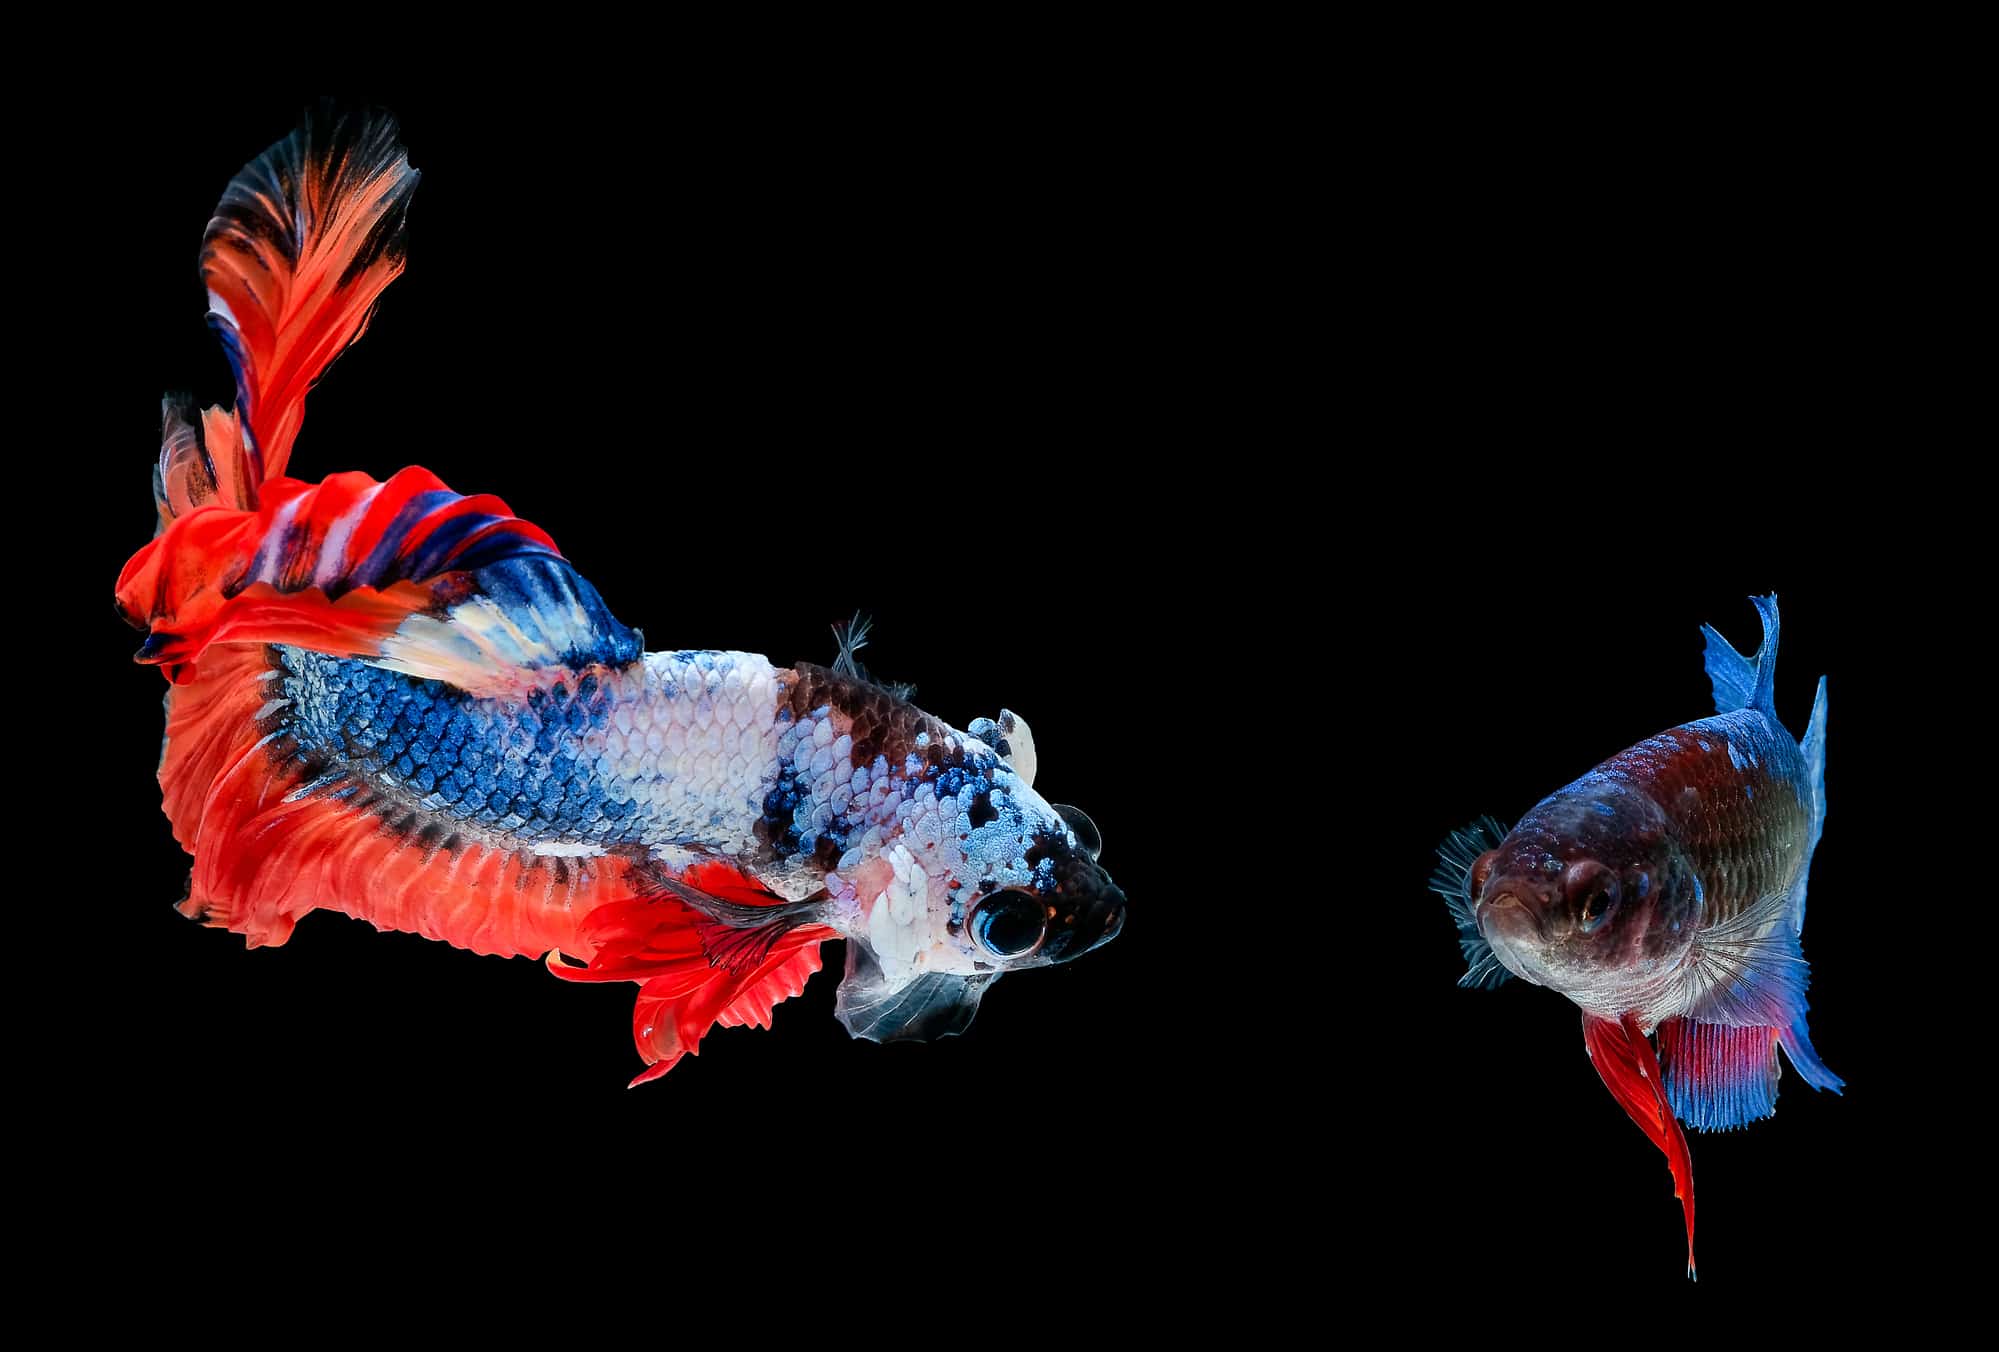 Male and Female betta fish